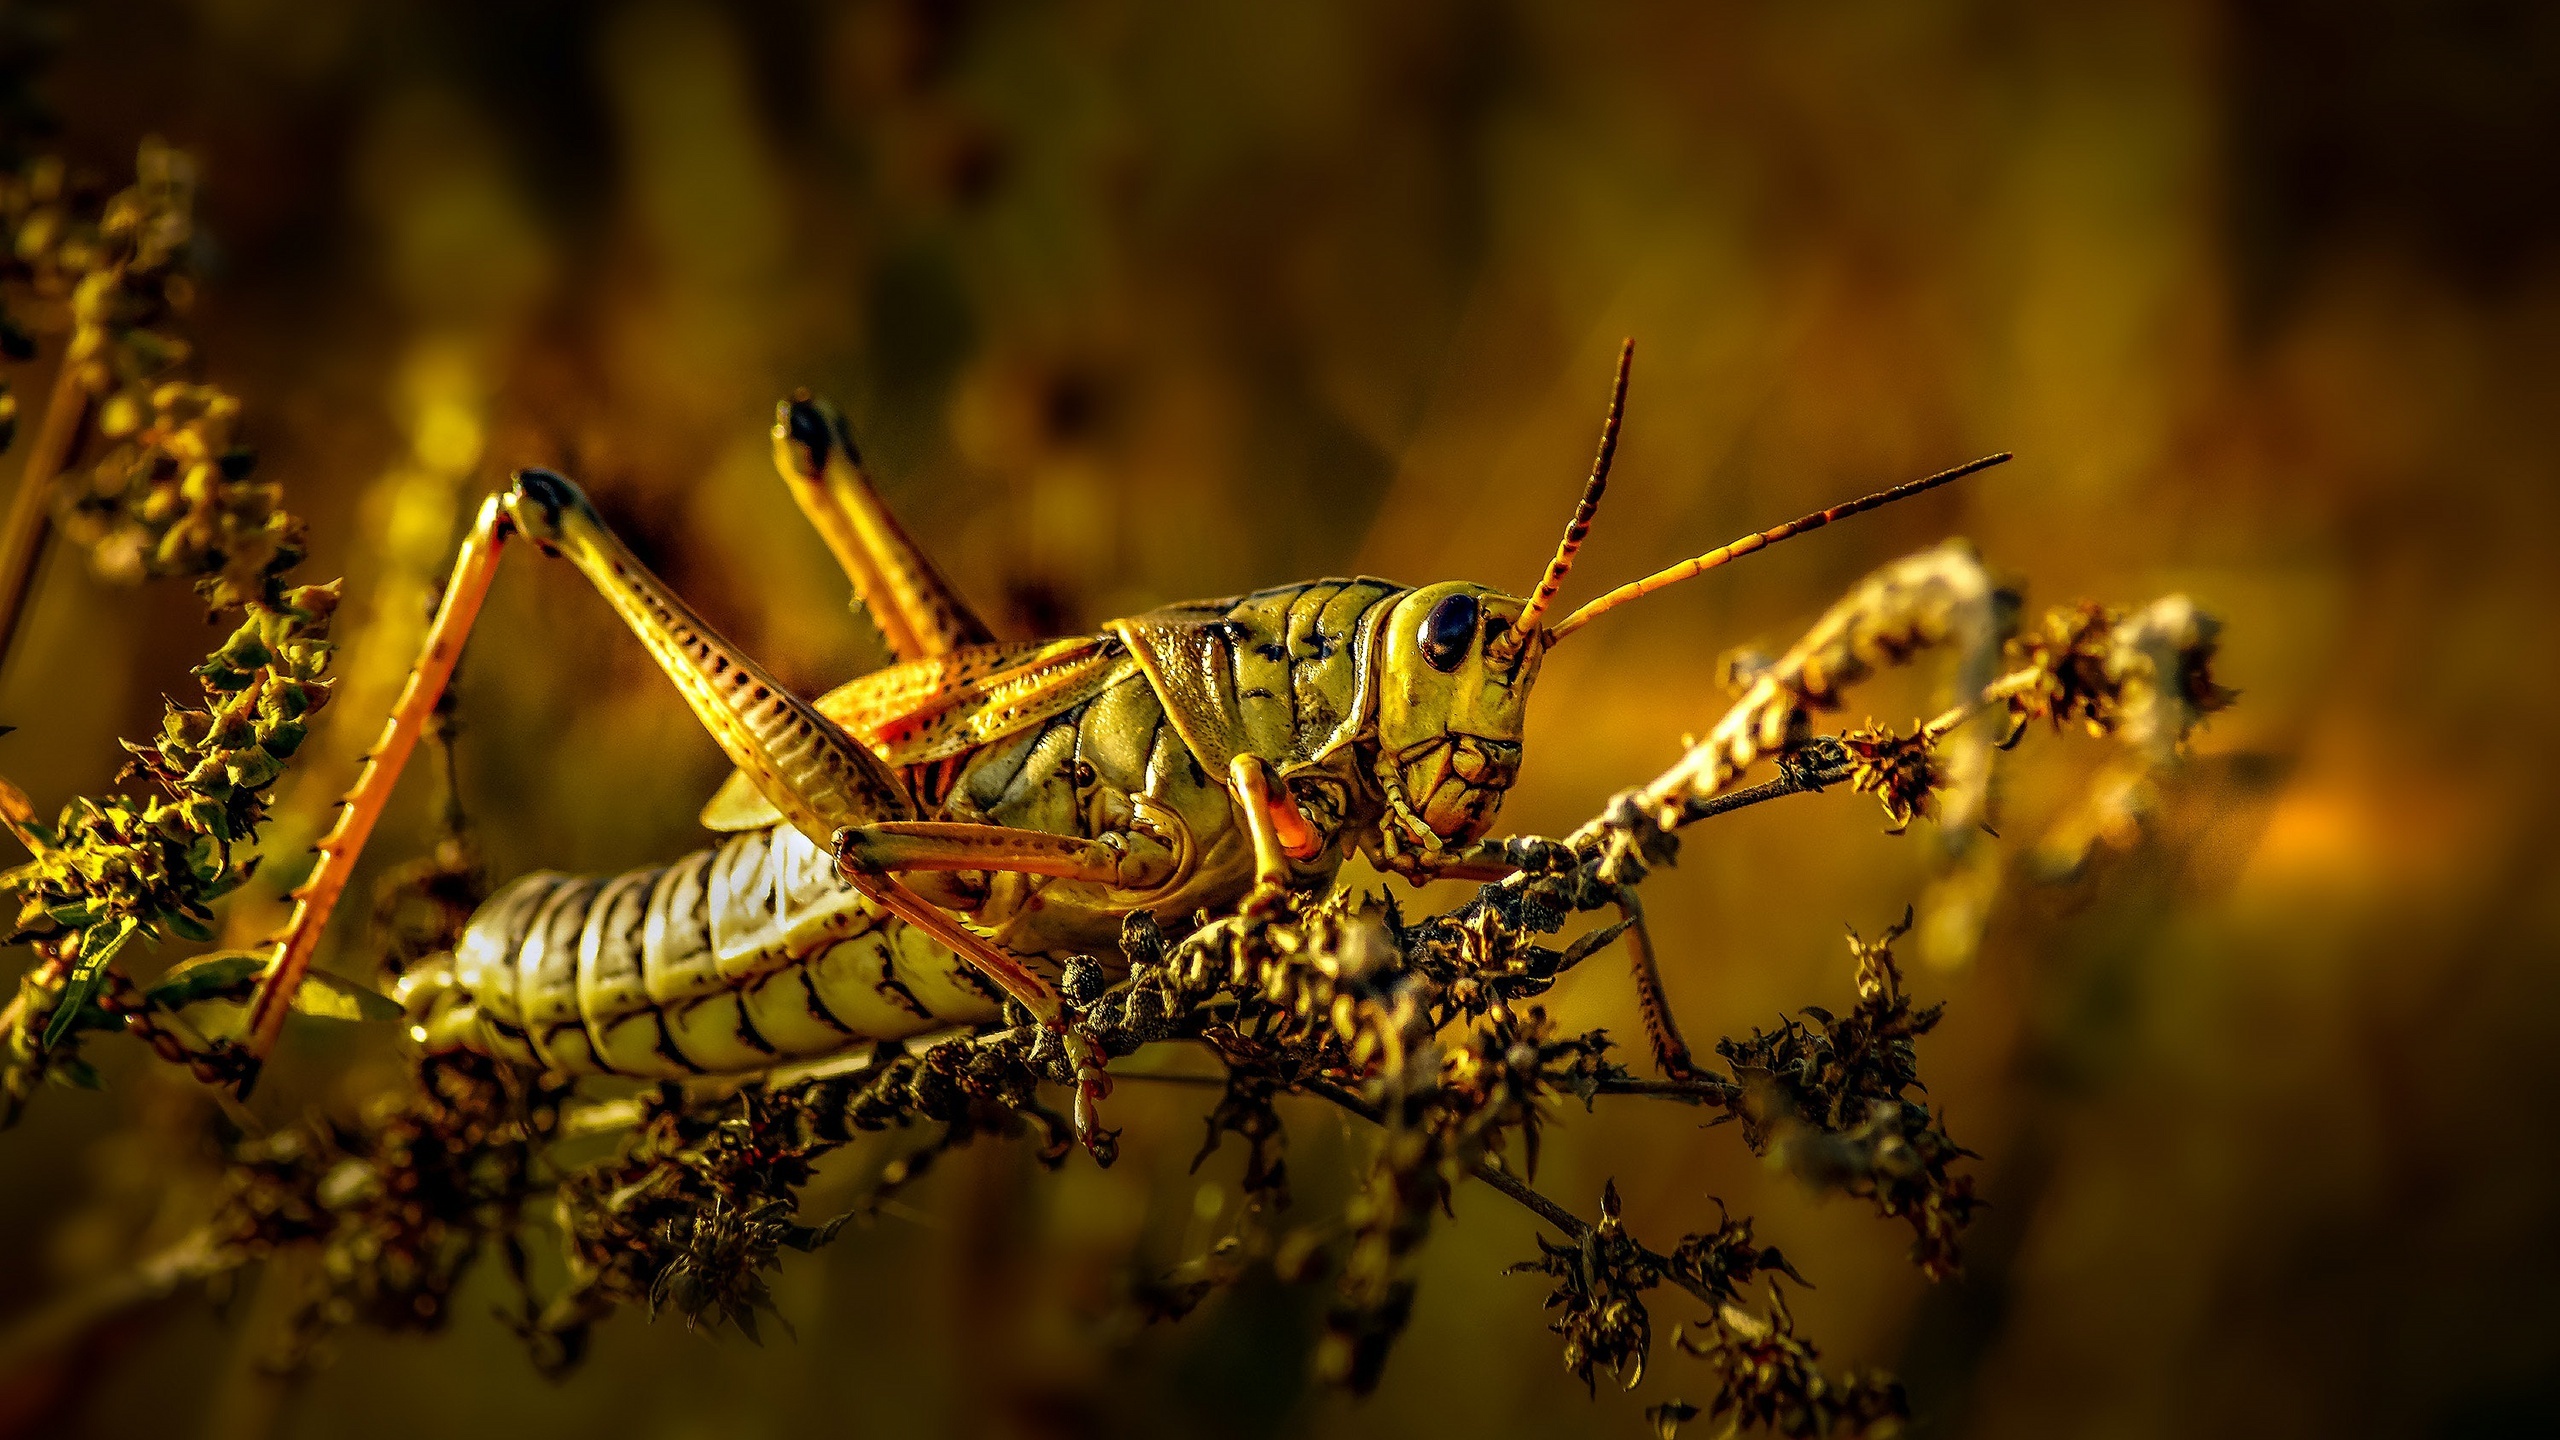 Grasshopper, HD wallpaper, Background image, 2560x1440 HD Desktop